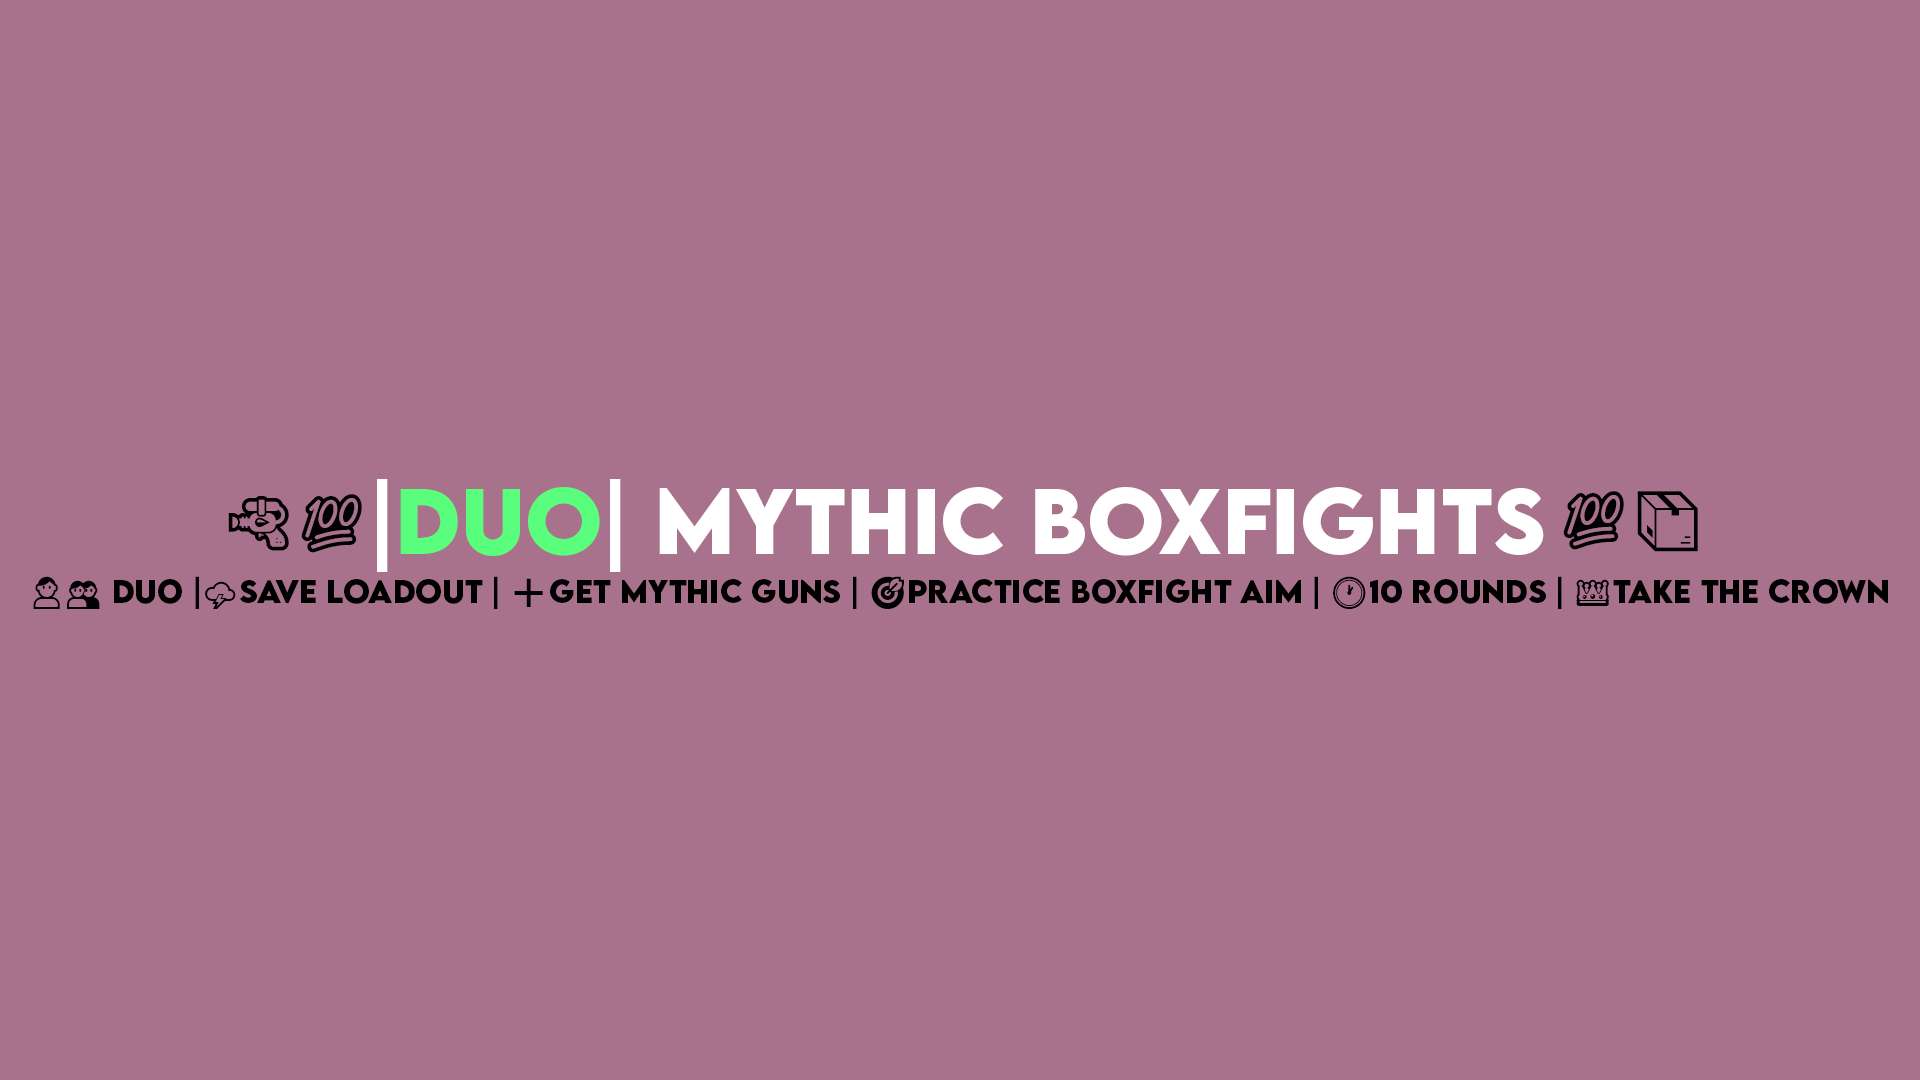 DUO MYTHIC BOXFIGHTS